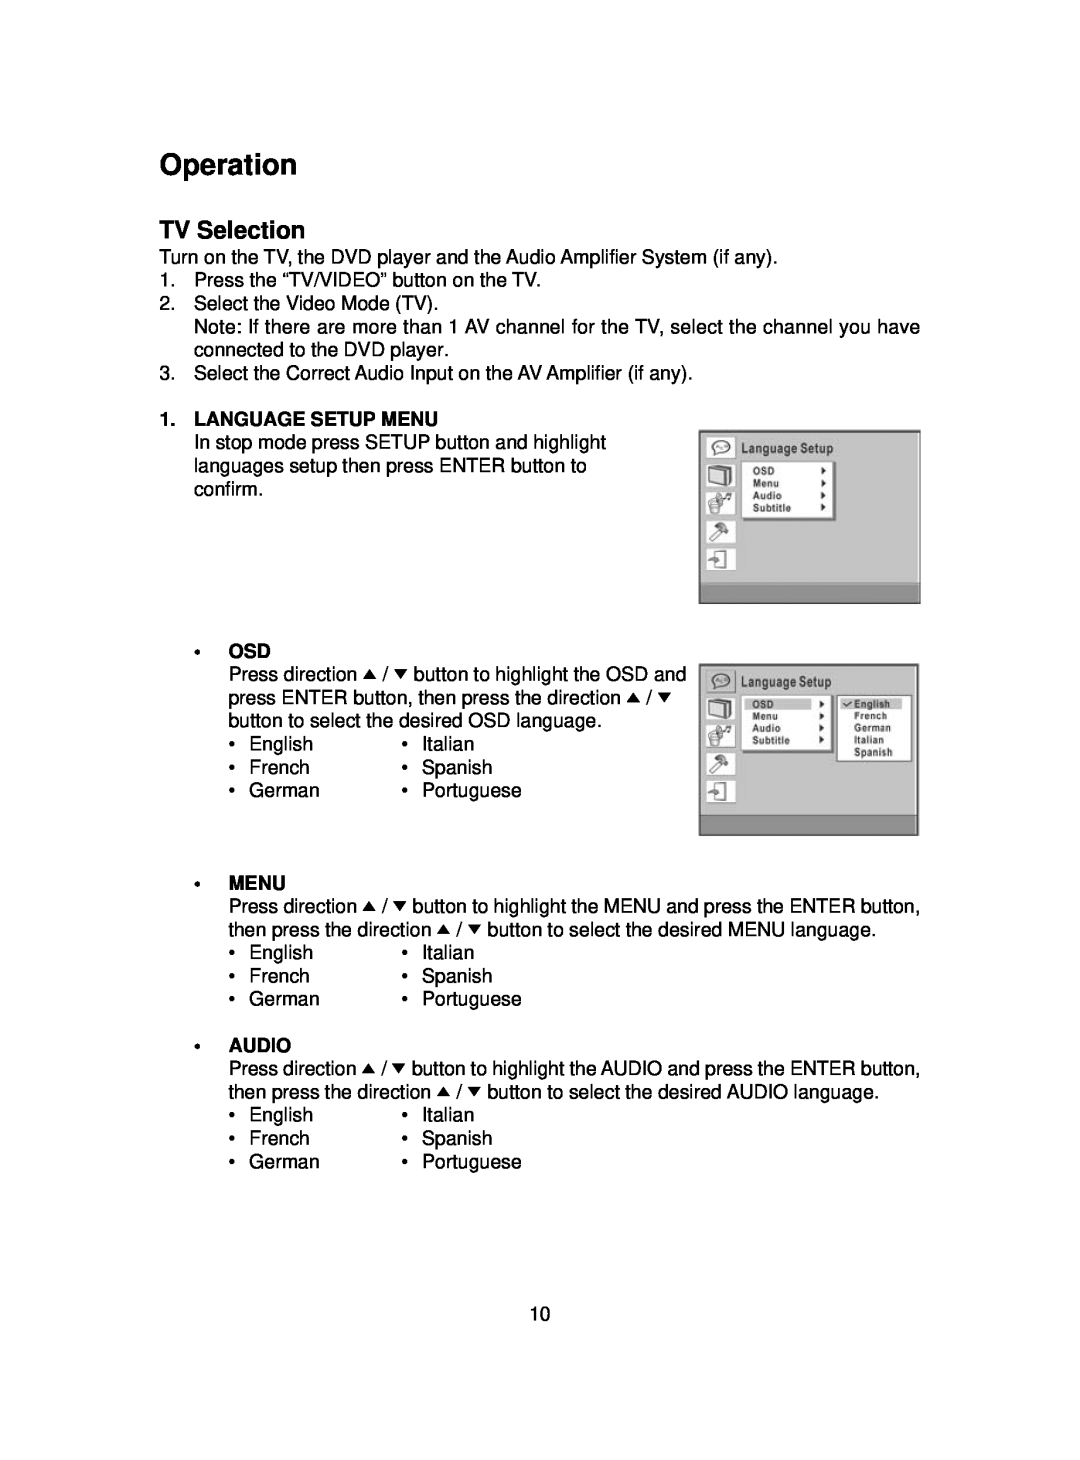 MGA Entertainment SMB-657 manual Operation, TV Selection, Language Setup Menu, Audio 